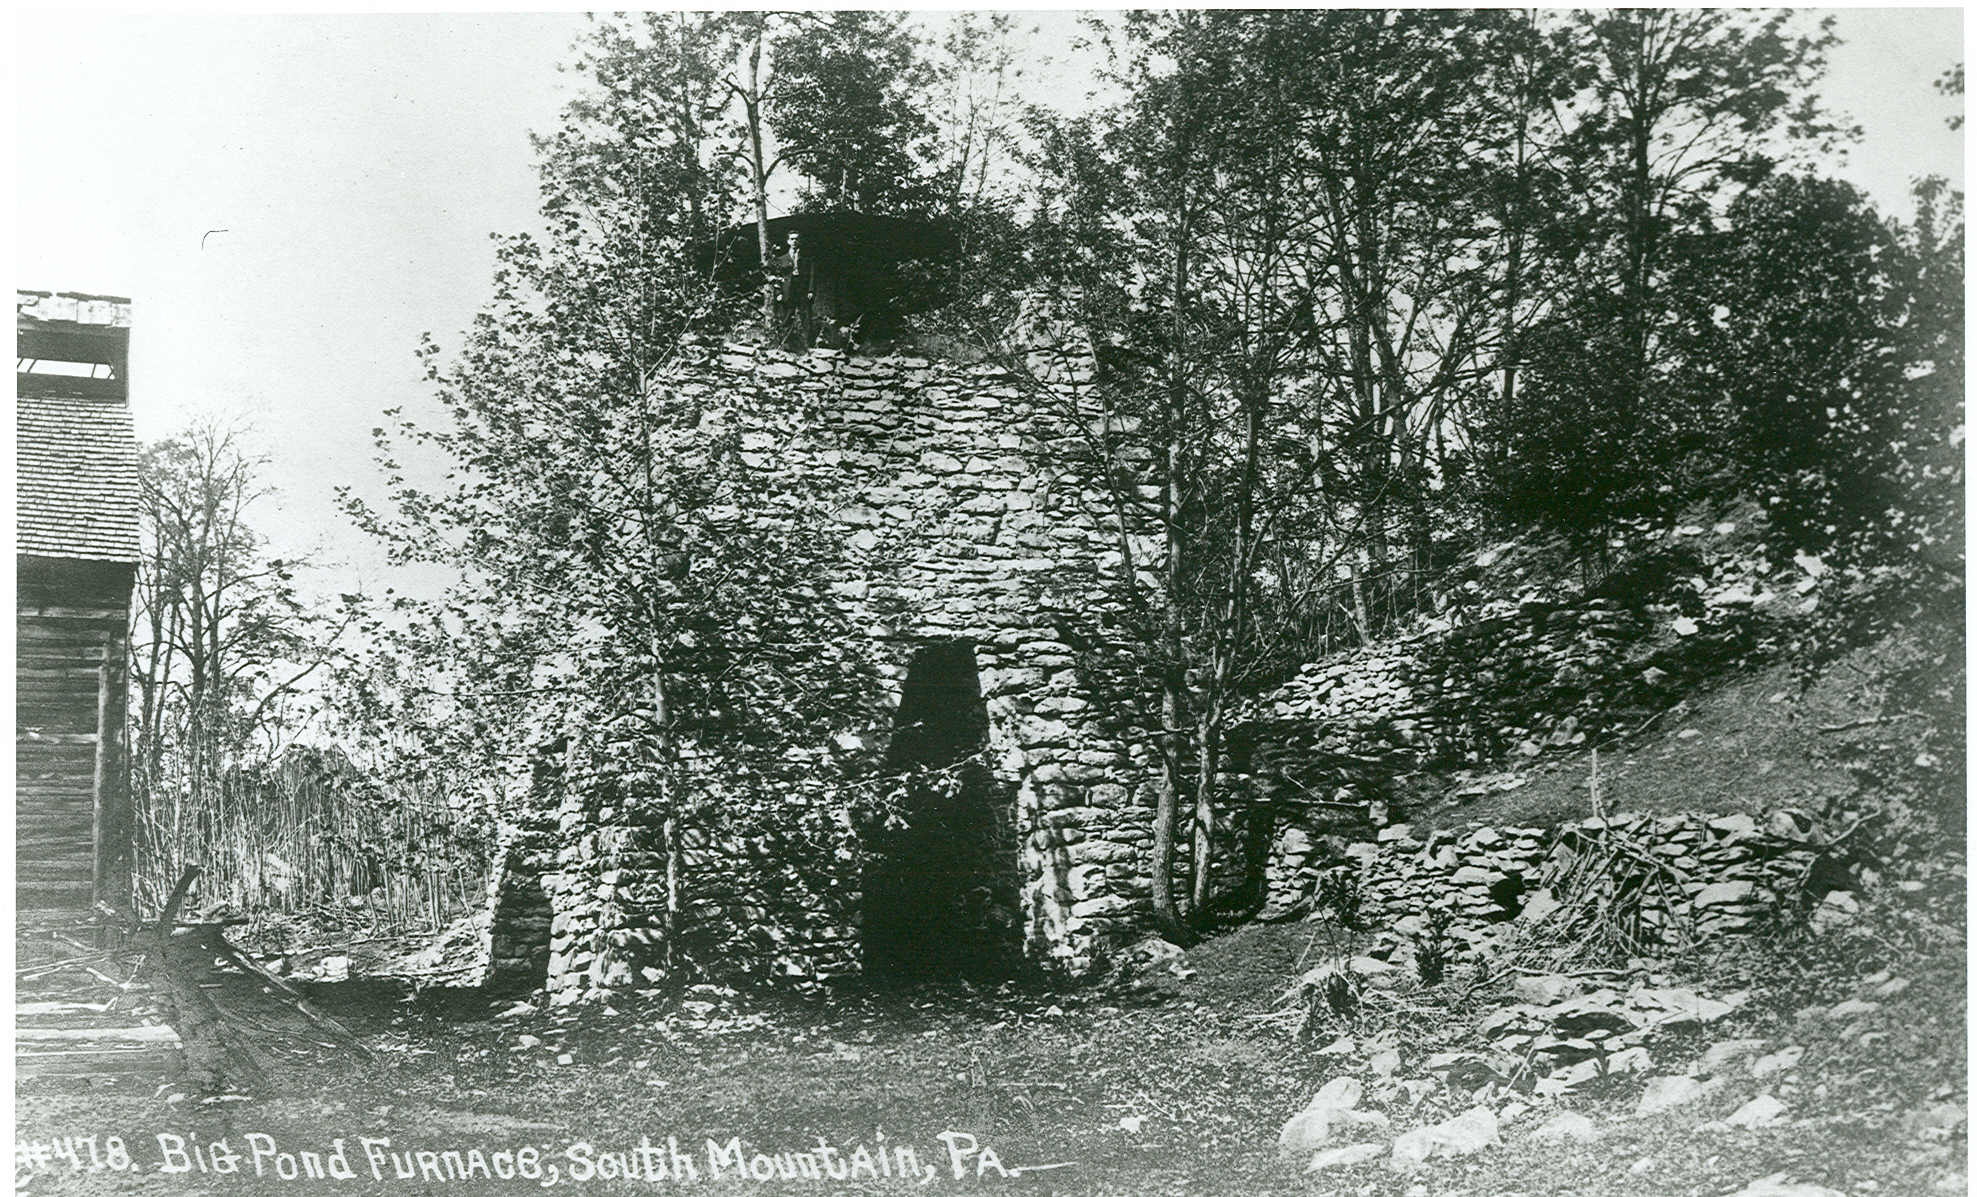 Photo of Big Pond Furnace at South Mountain, PA circa 1915